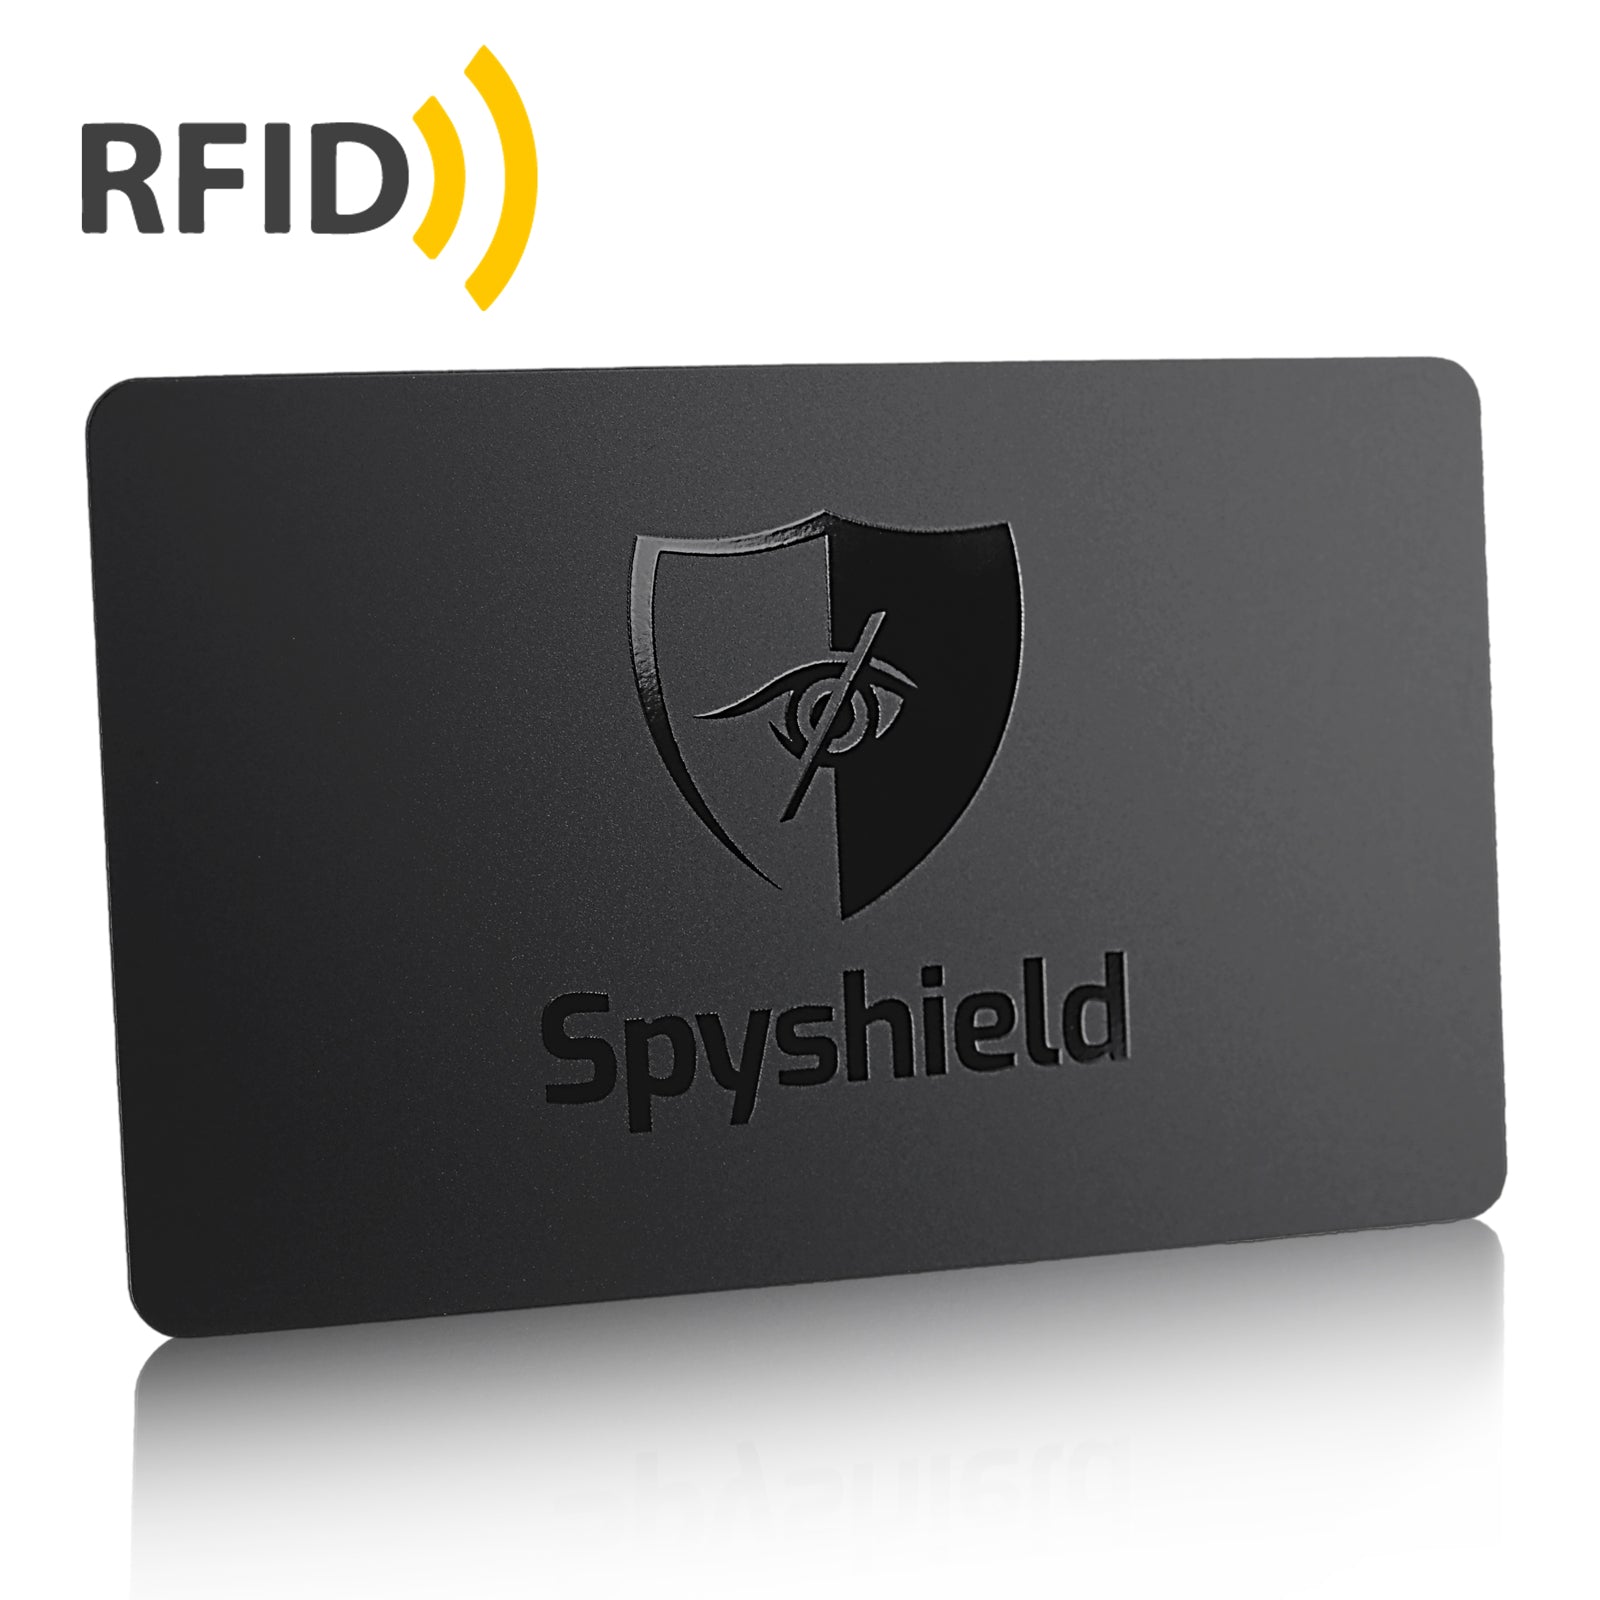 Spyshield RFID blocking card